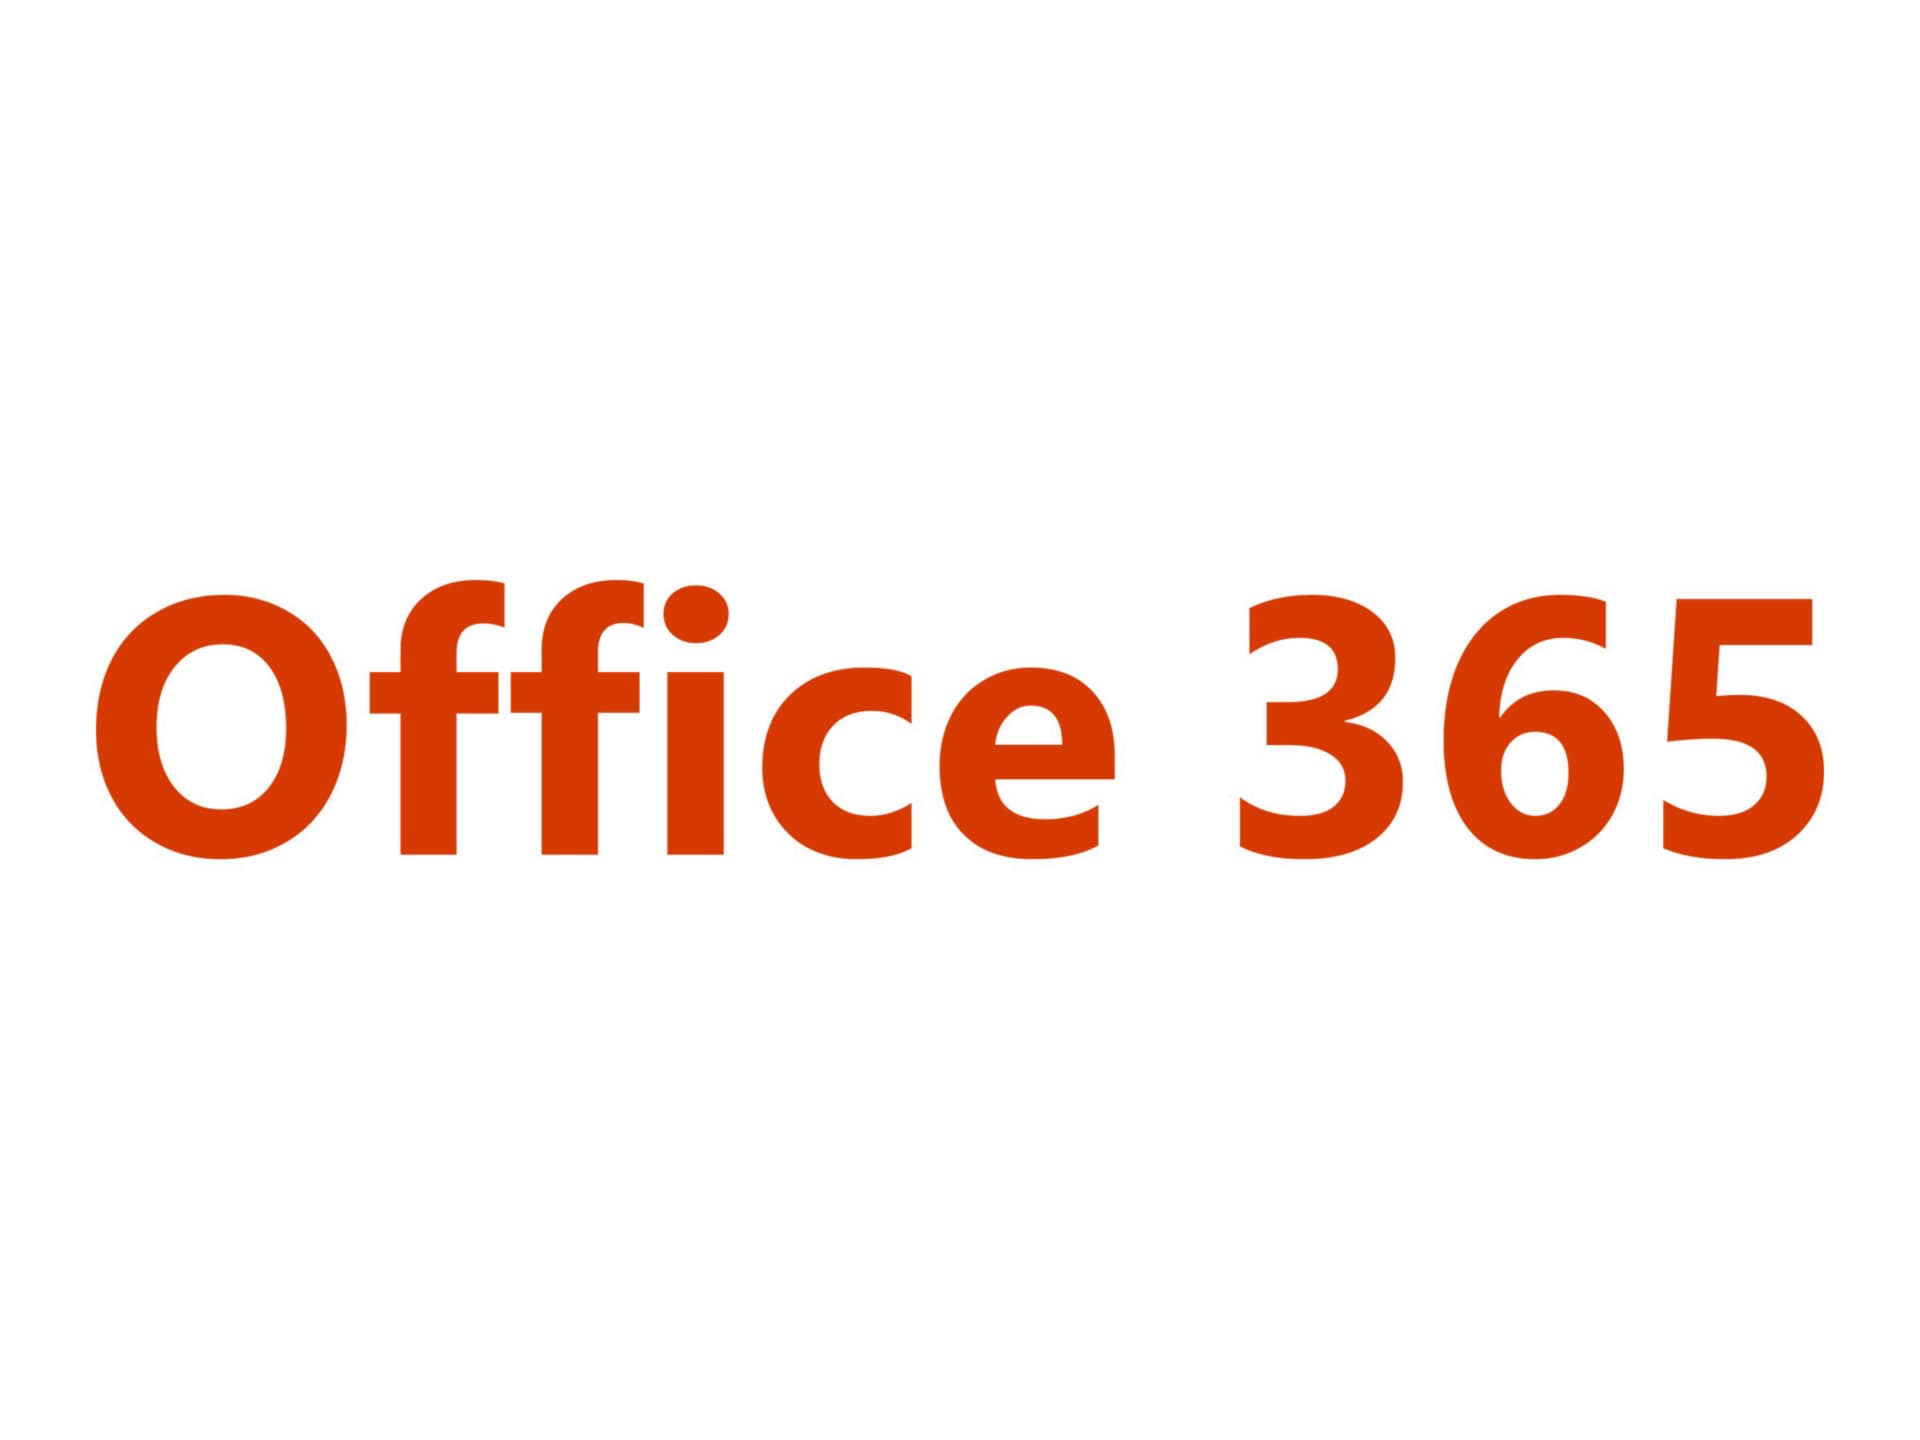 Microsoft Office 365 Enterprise E3 - subscription license (1 month) - 1 use